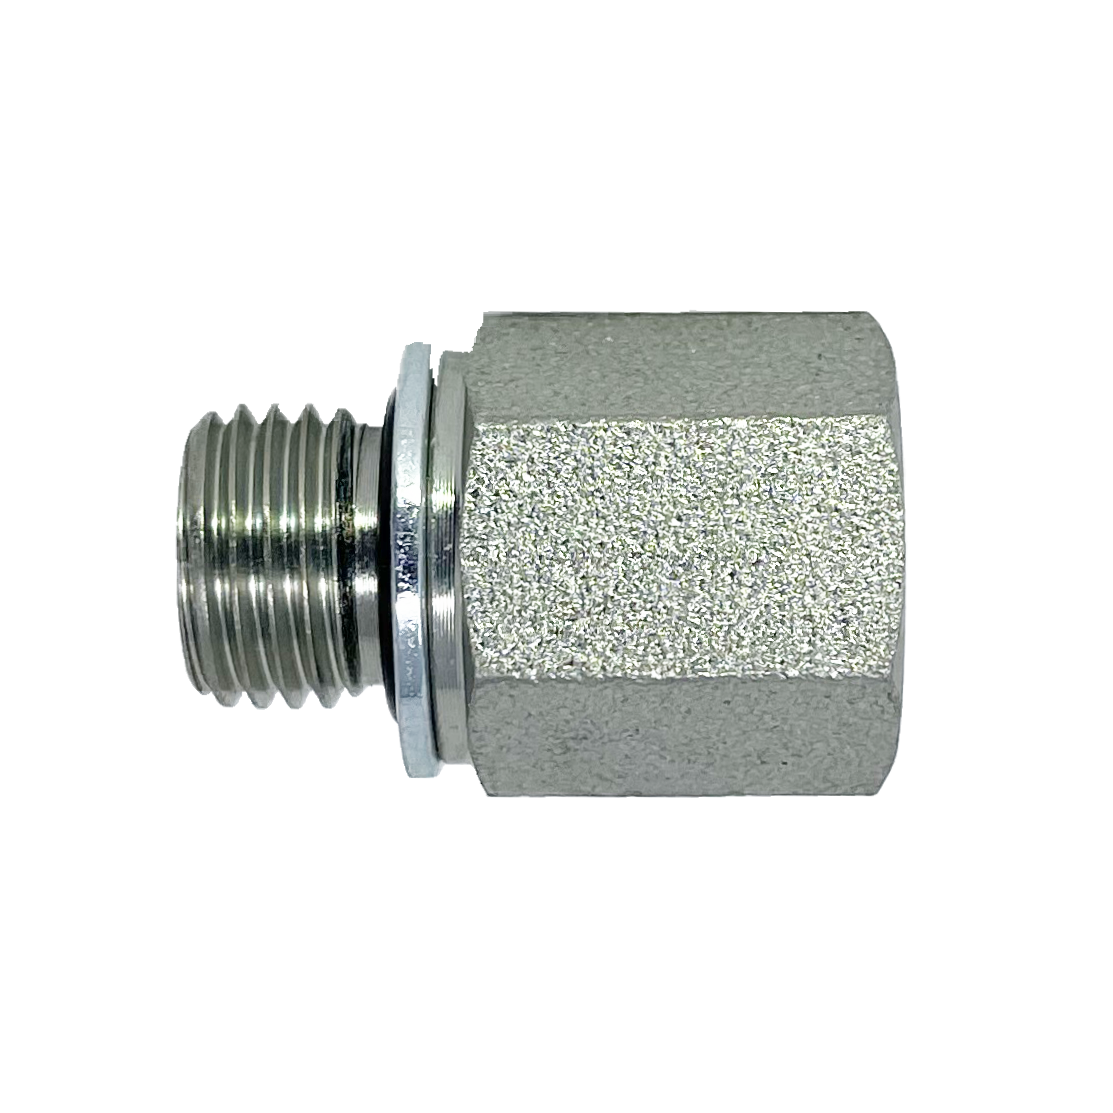 9635S-22-L15-06 : Adaptall Straight Adapter, Male L15 DIN Tube x Female 0.375 (3/8") NPT, Carbon Steel